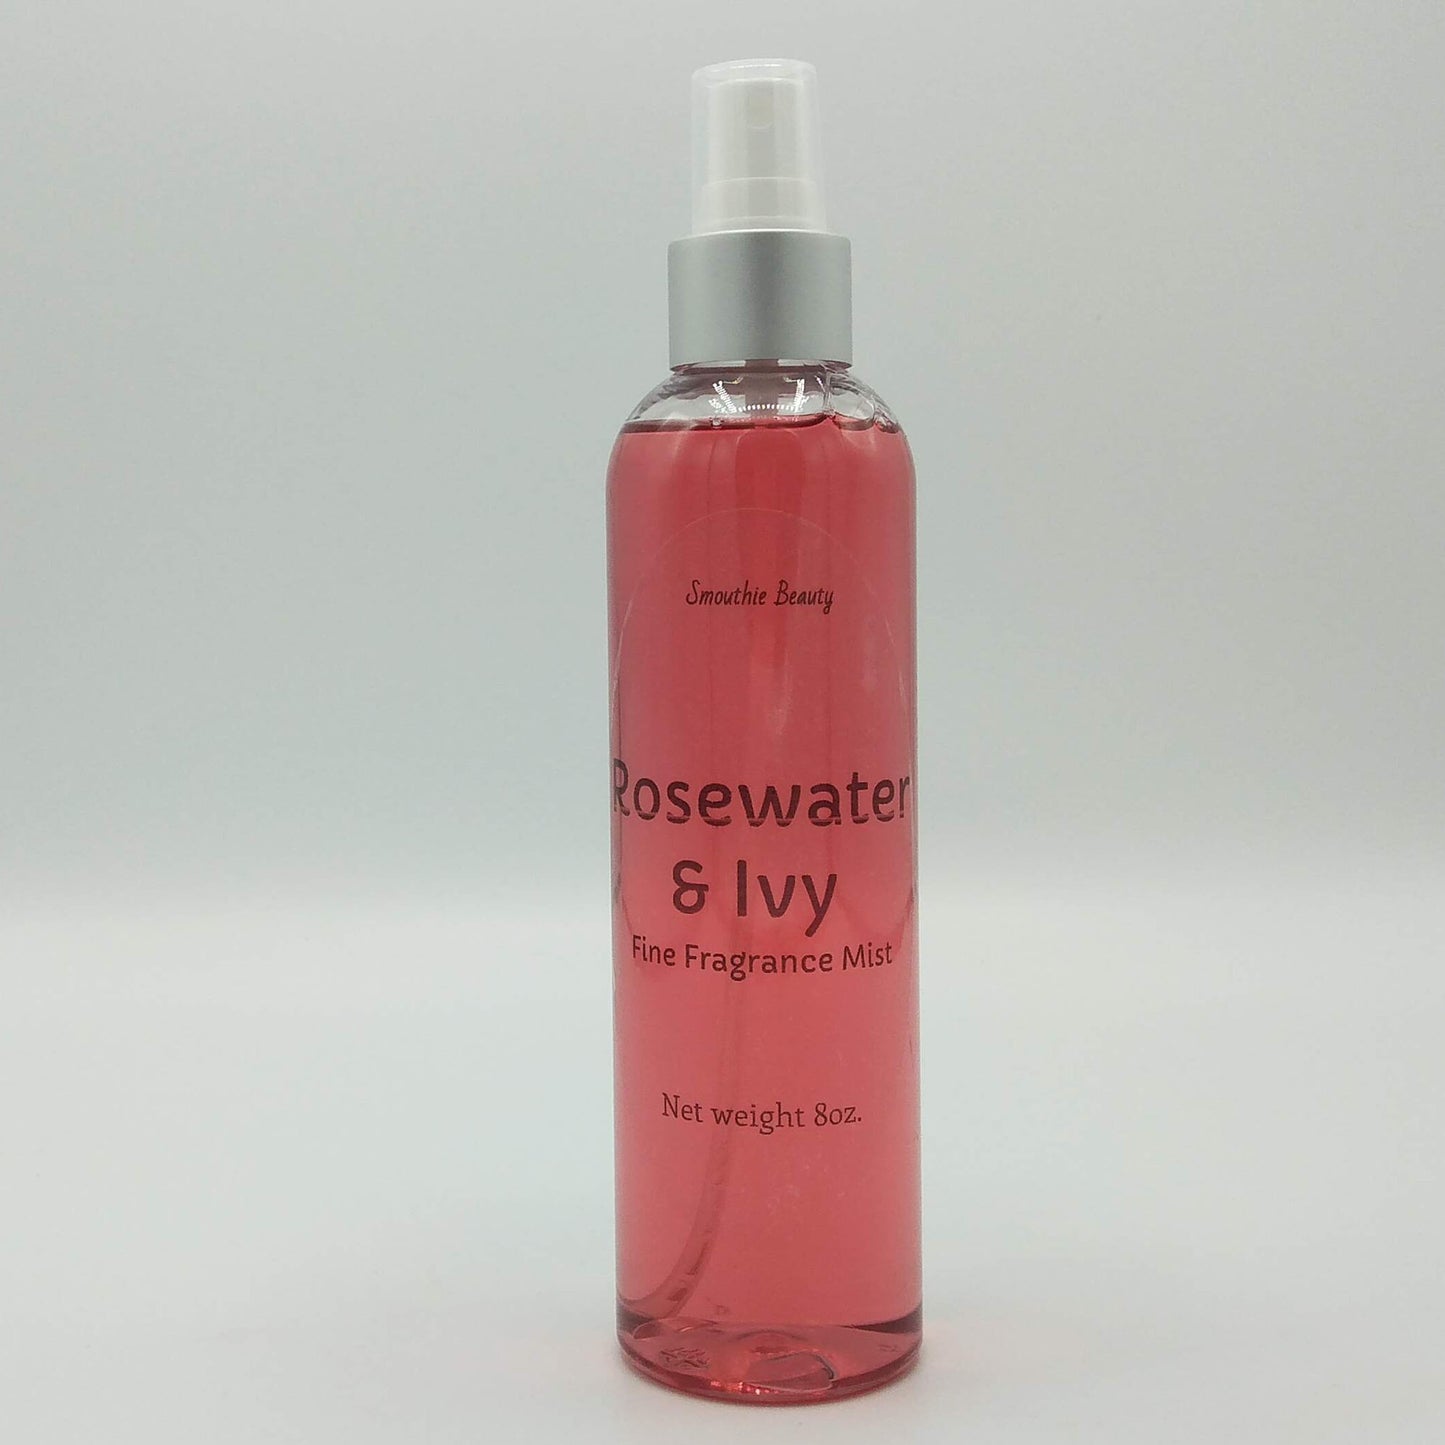 Rosewater & Ivy Fine Fragrance Mist